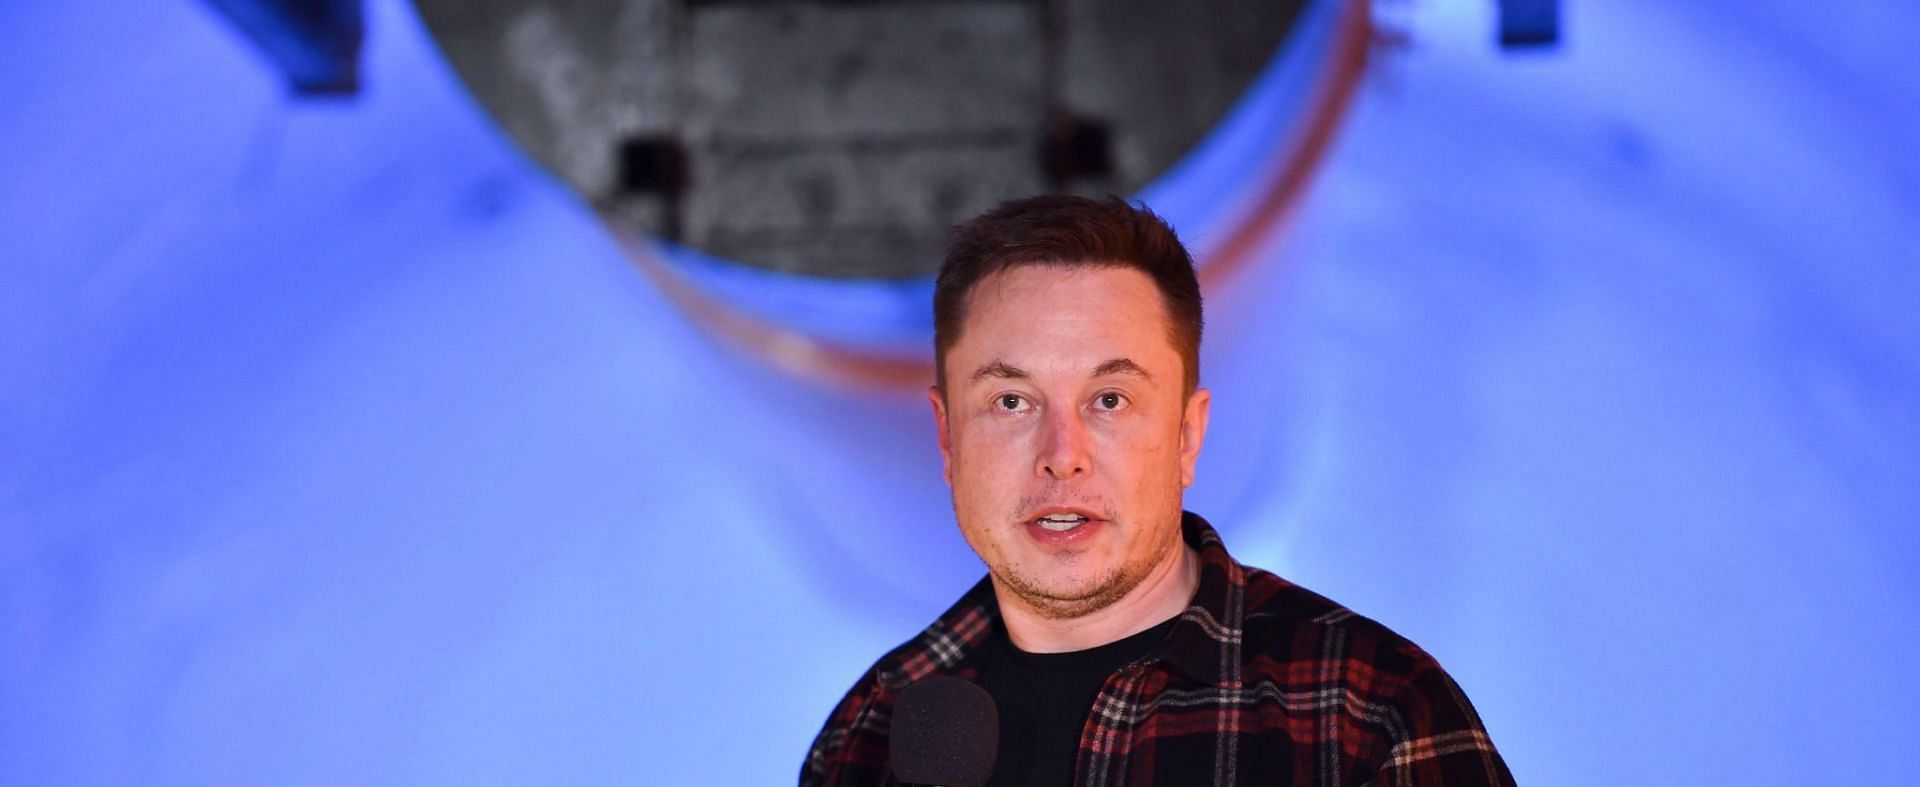 Netizens slammed Elon Musk as &#039;transphobic&#039; due to comments against gender pronouns (Image via Getty Images)